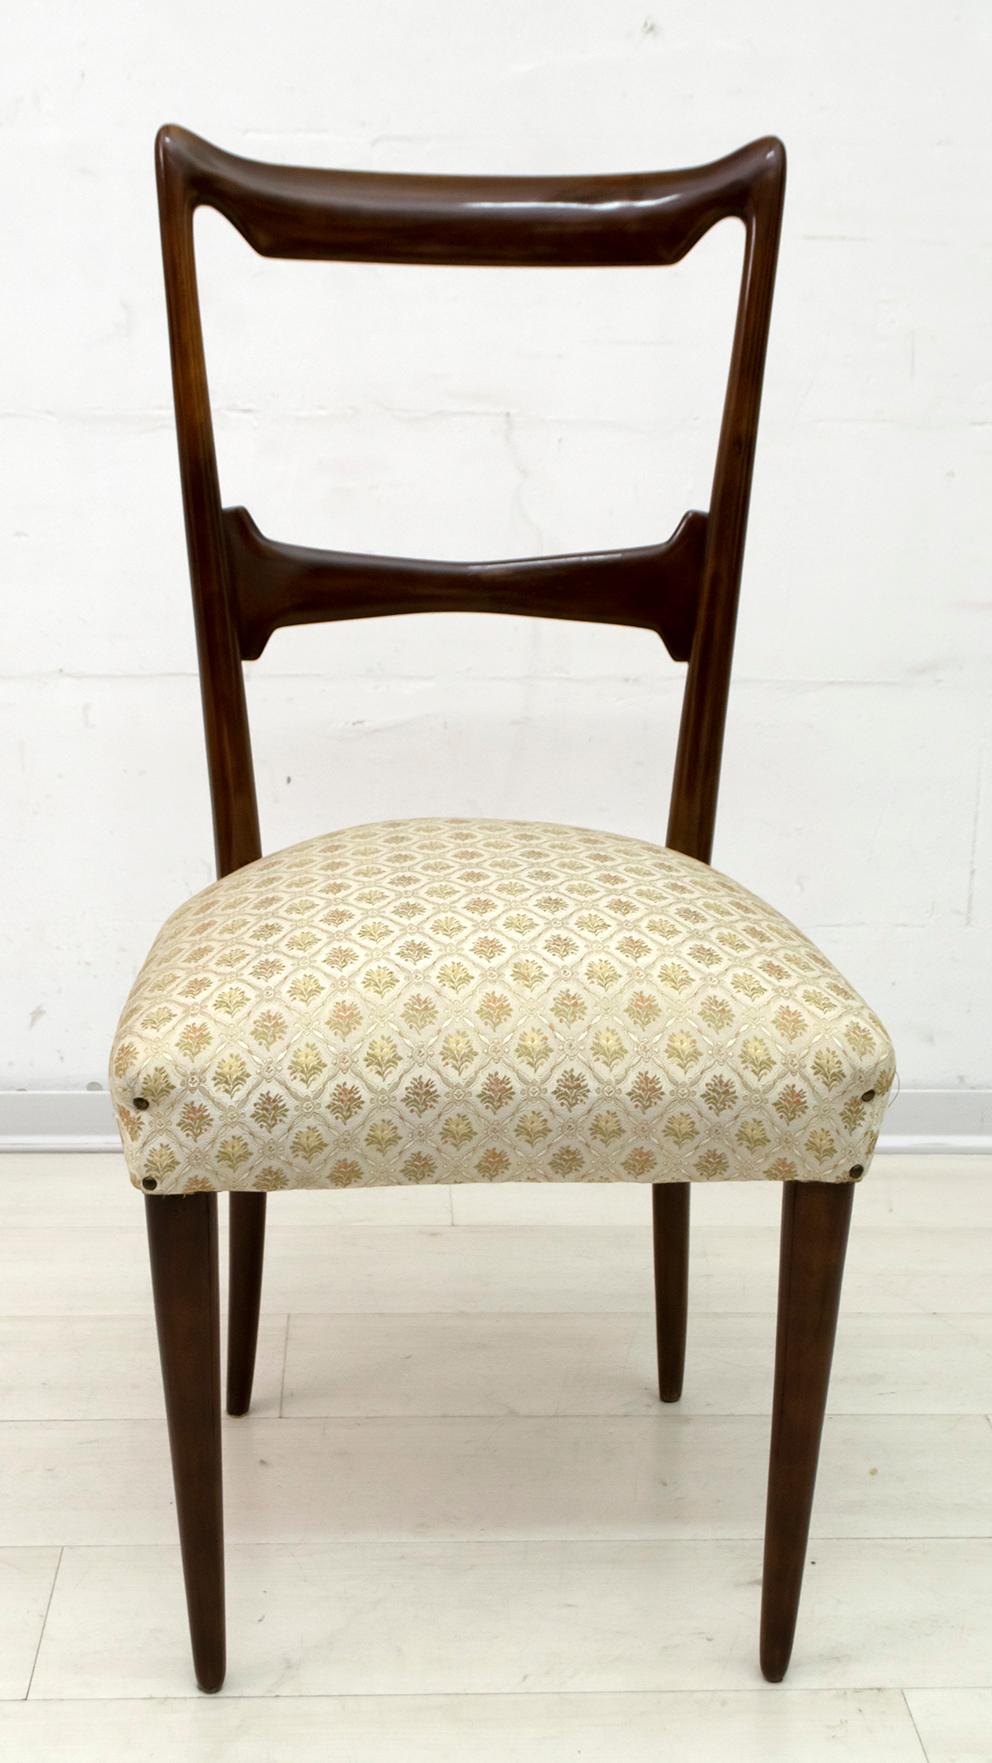 Fabric Six Guglielmo Ulrich Mid-Century Modern Italian Walnut Dining Chairs, 1950s For Sale